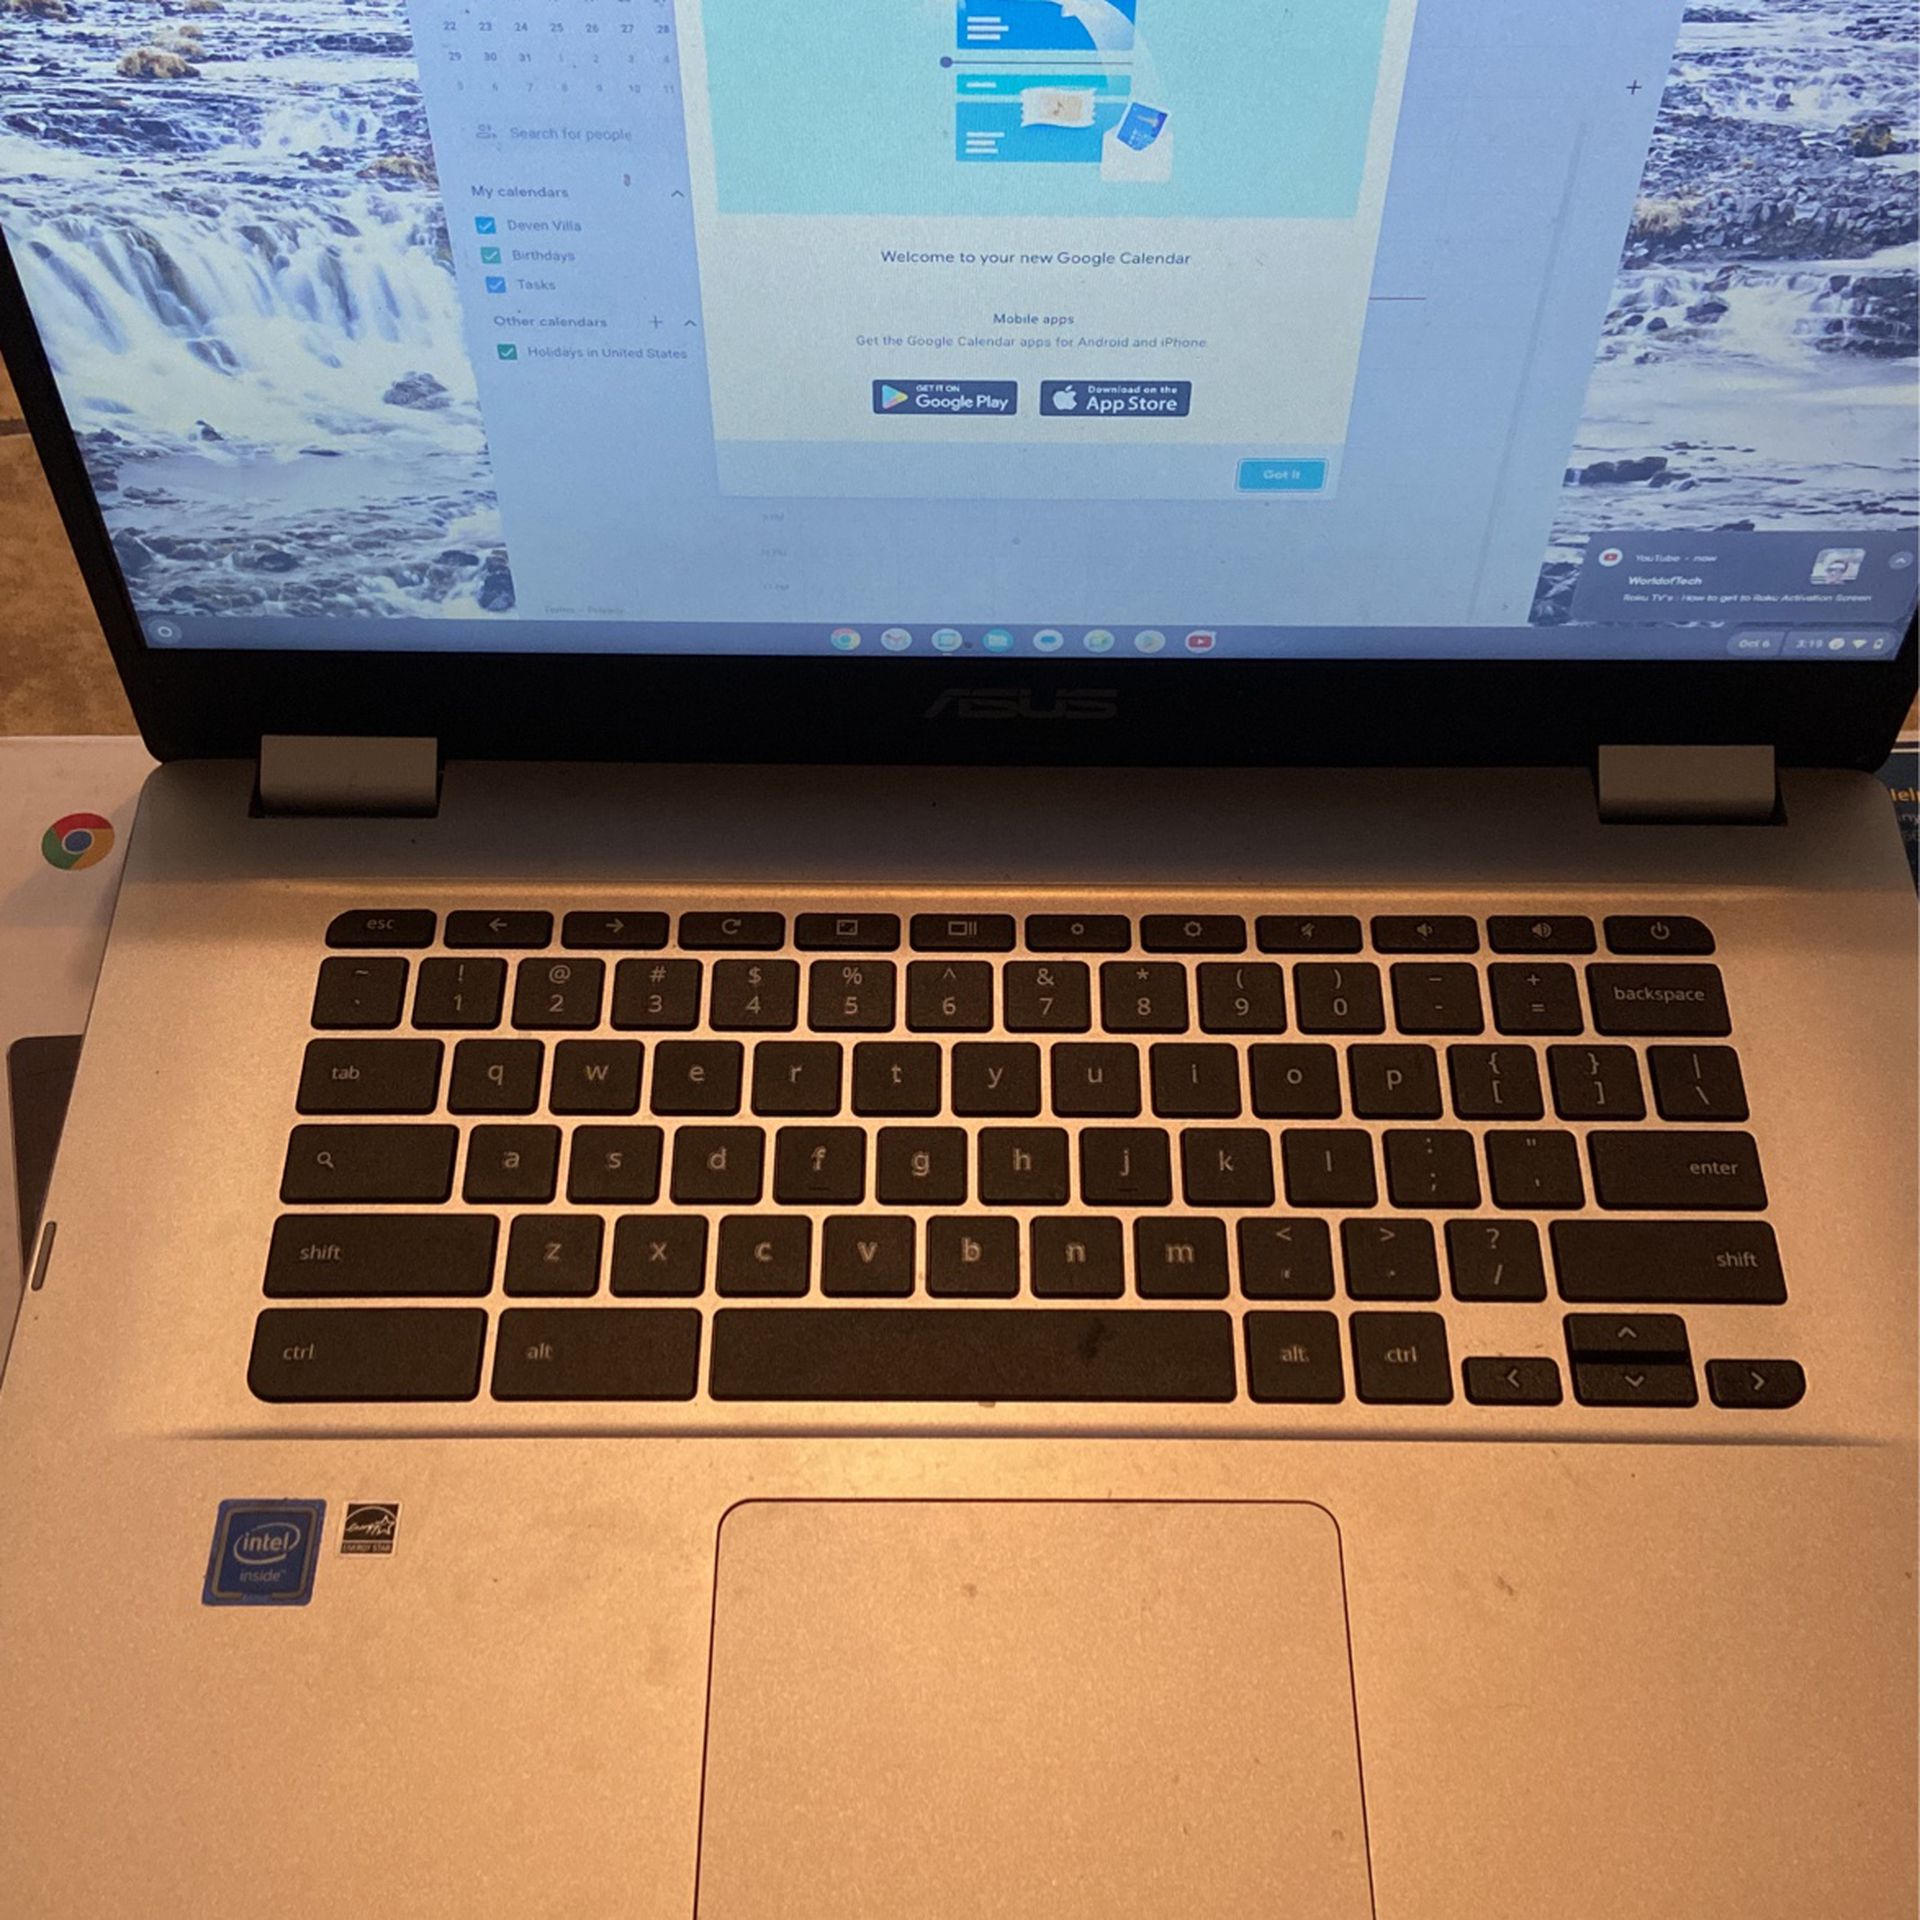 Asus ChromeBook